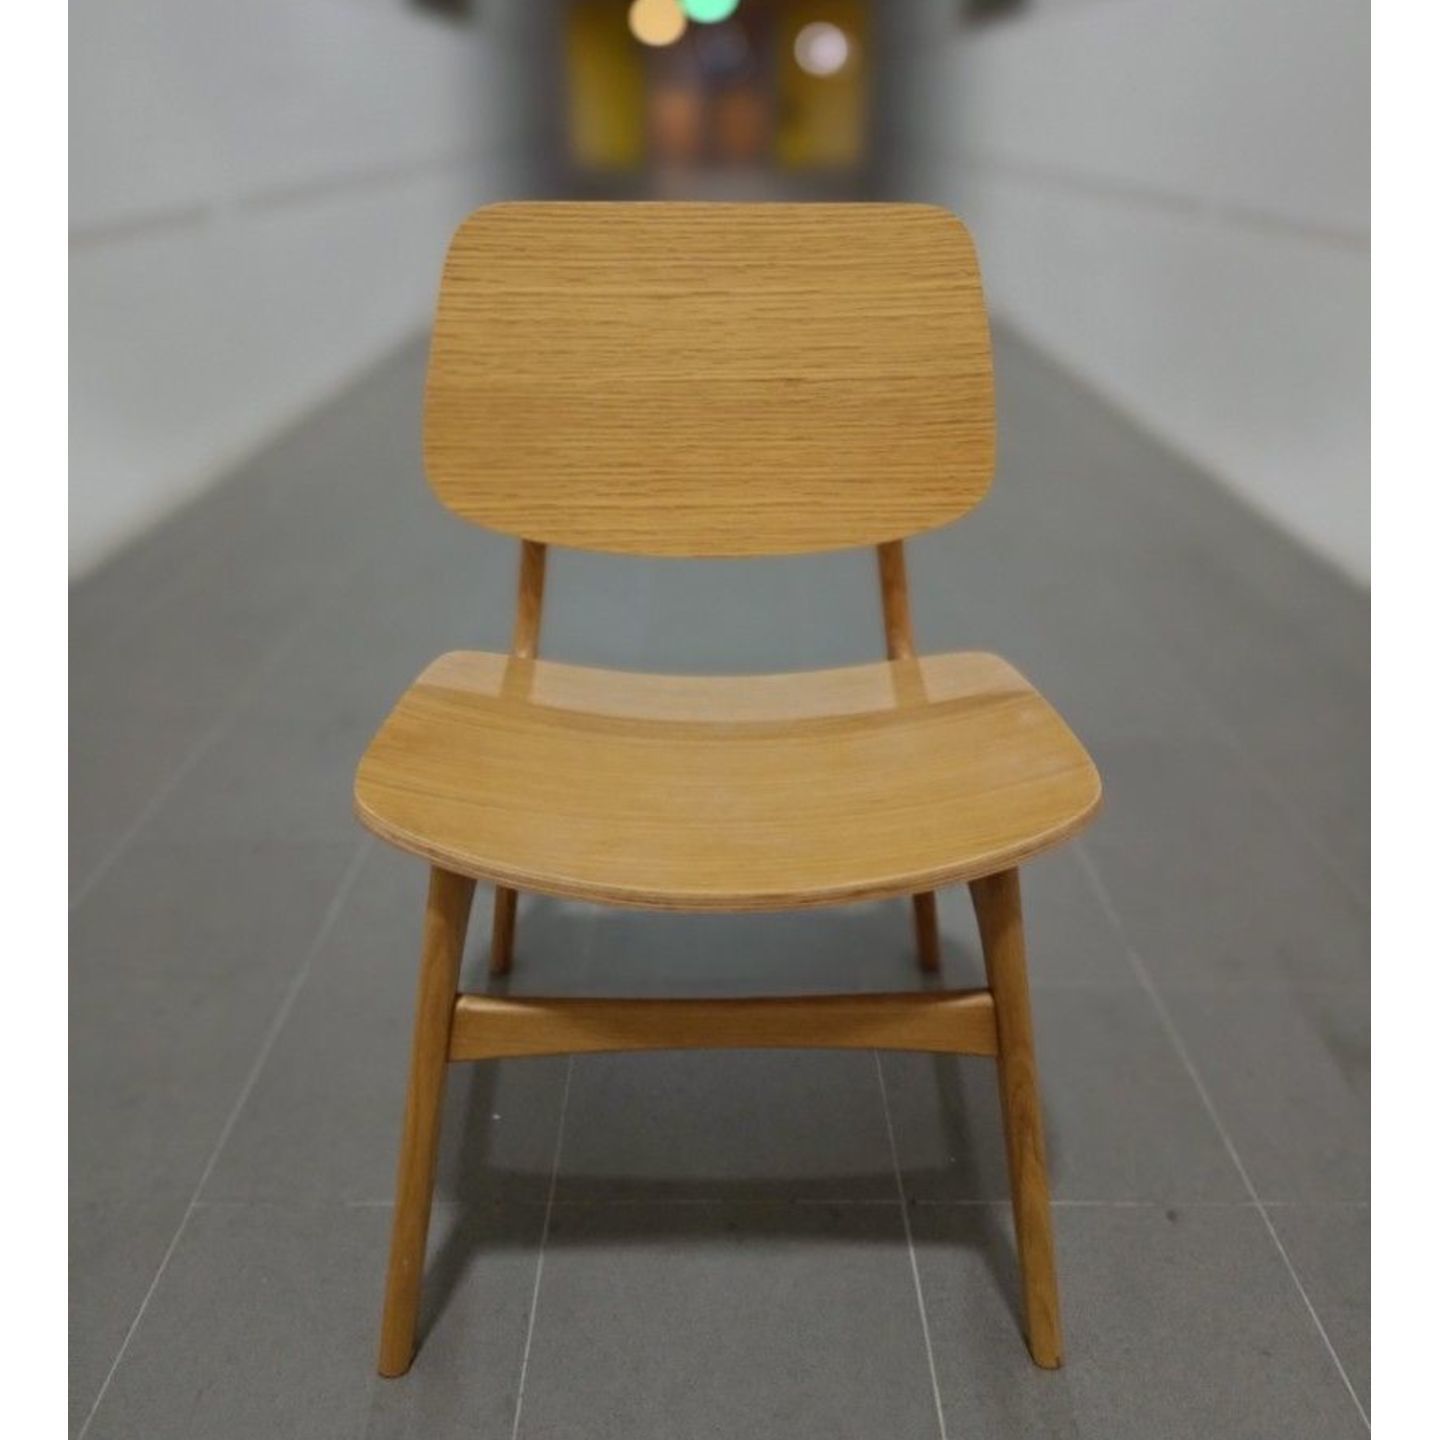 ROFA Solid Wood Chair in OAK